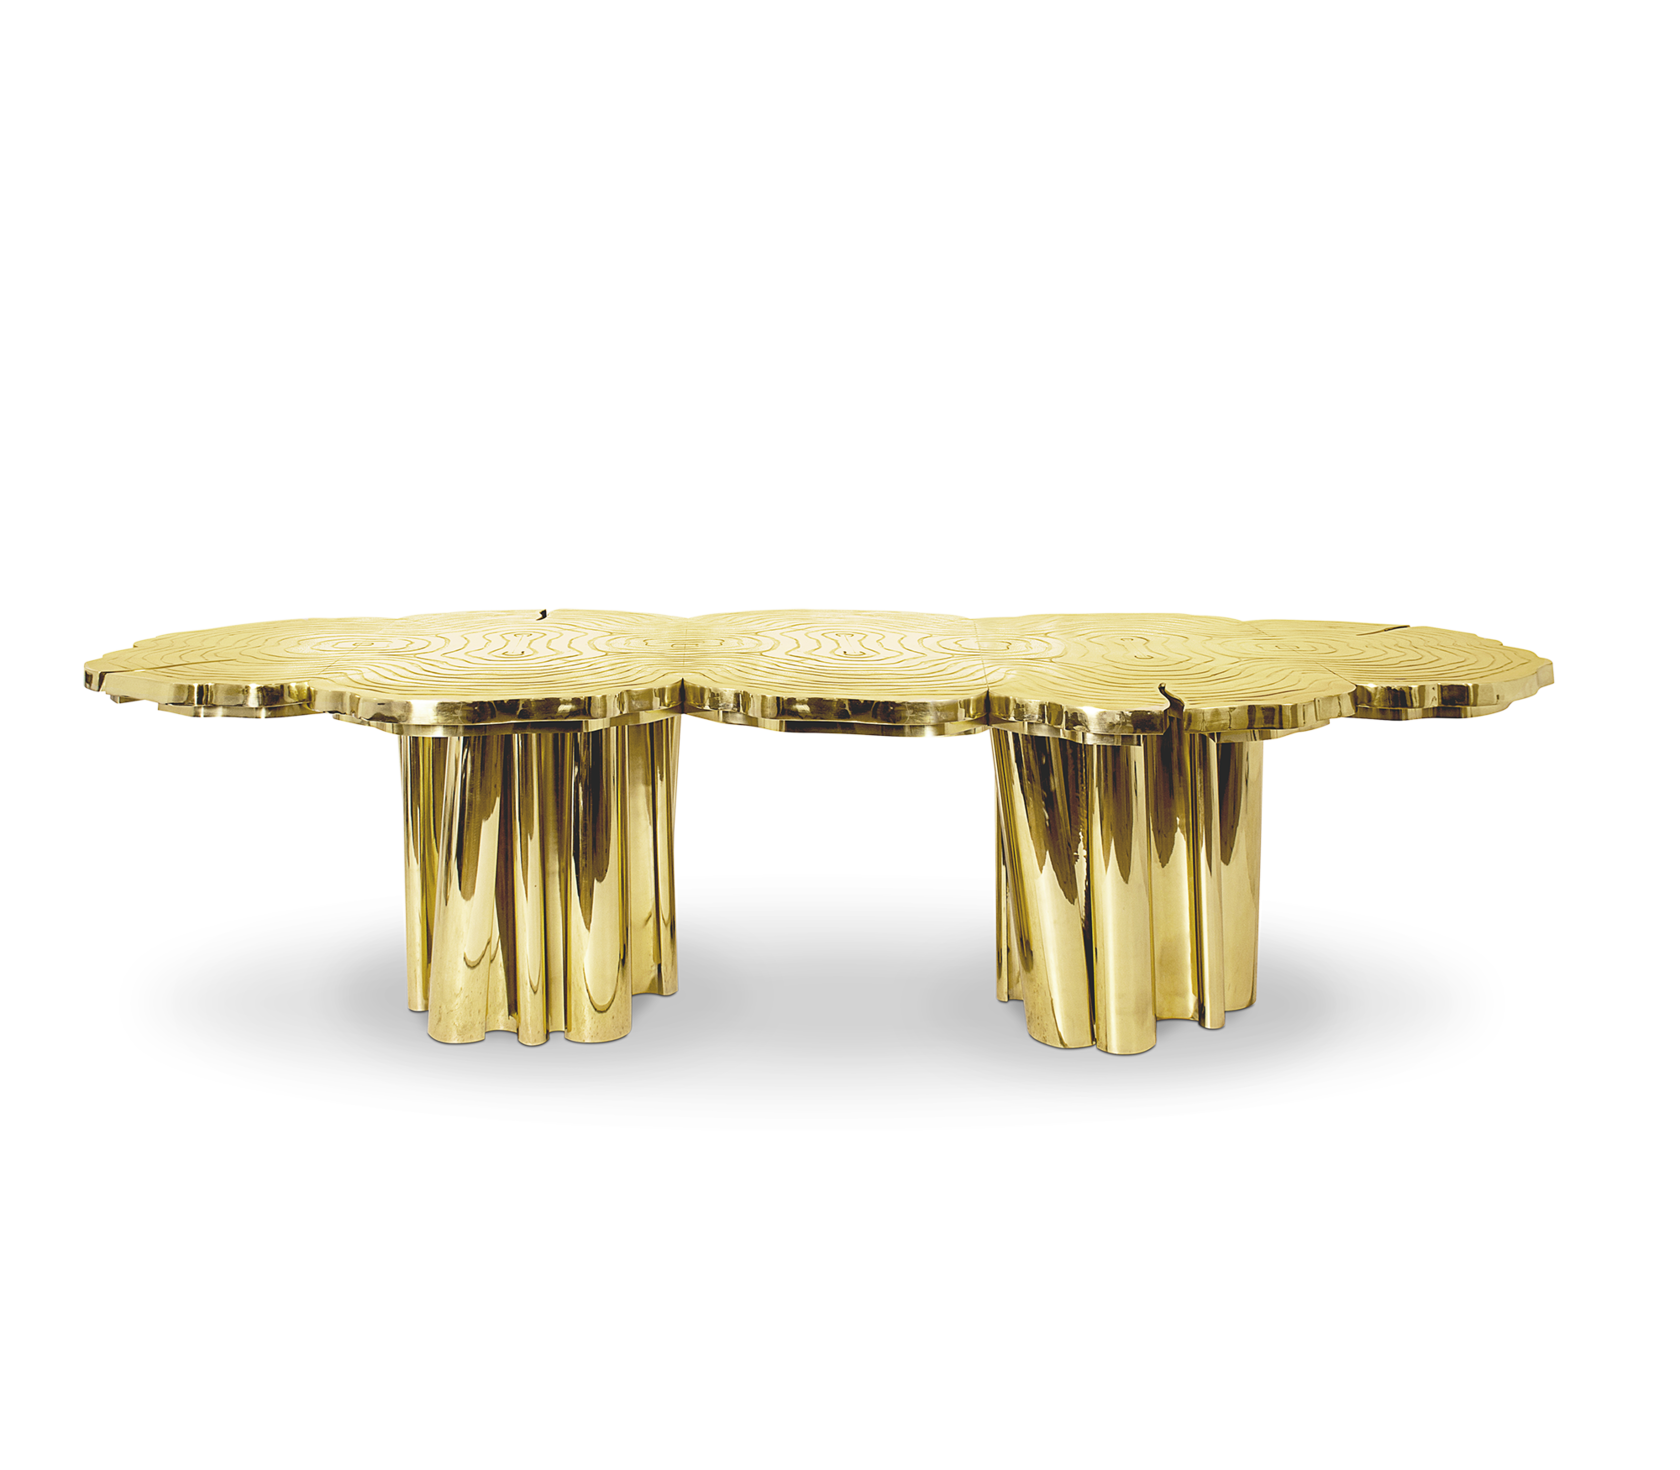 Золотистый стол. Boca Trino стол обеденный. Стол с золотыми ножками. Стол с золотыми ножками обеденный. Стол обеденный с золотом.